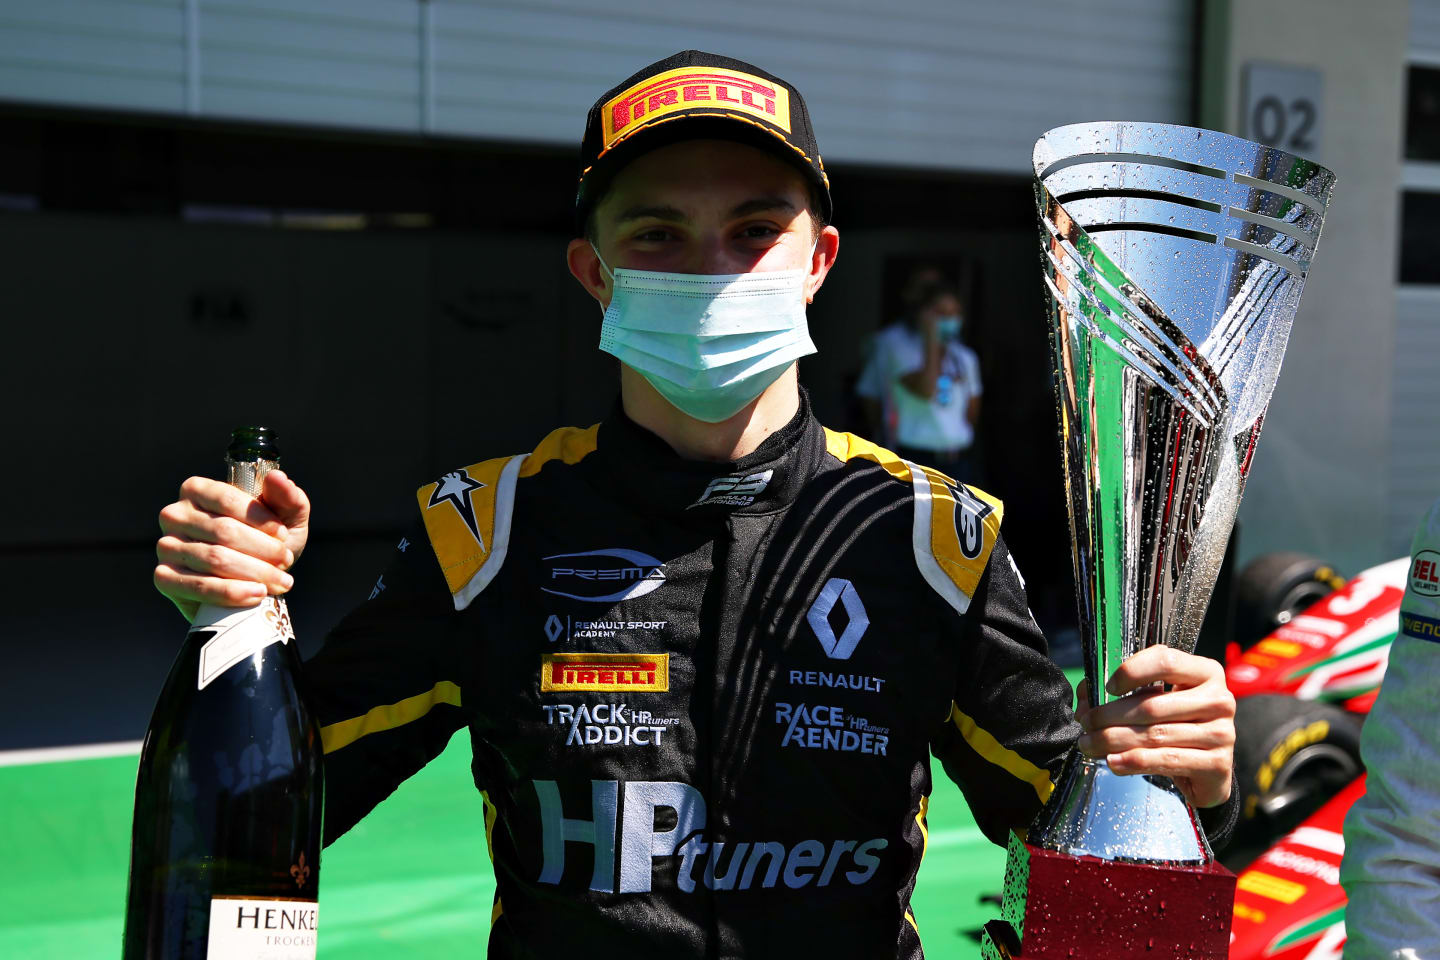 SPIELBERG, AUSTRIA - JULY 04: Race winner Oscar Piastri of Australia and Prema Racing celebrates in